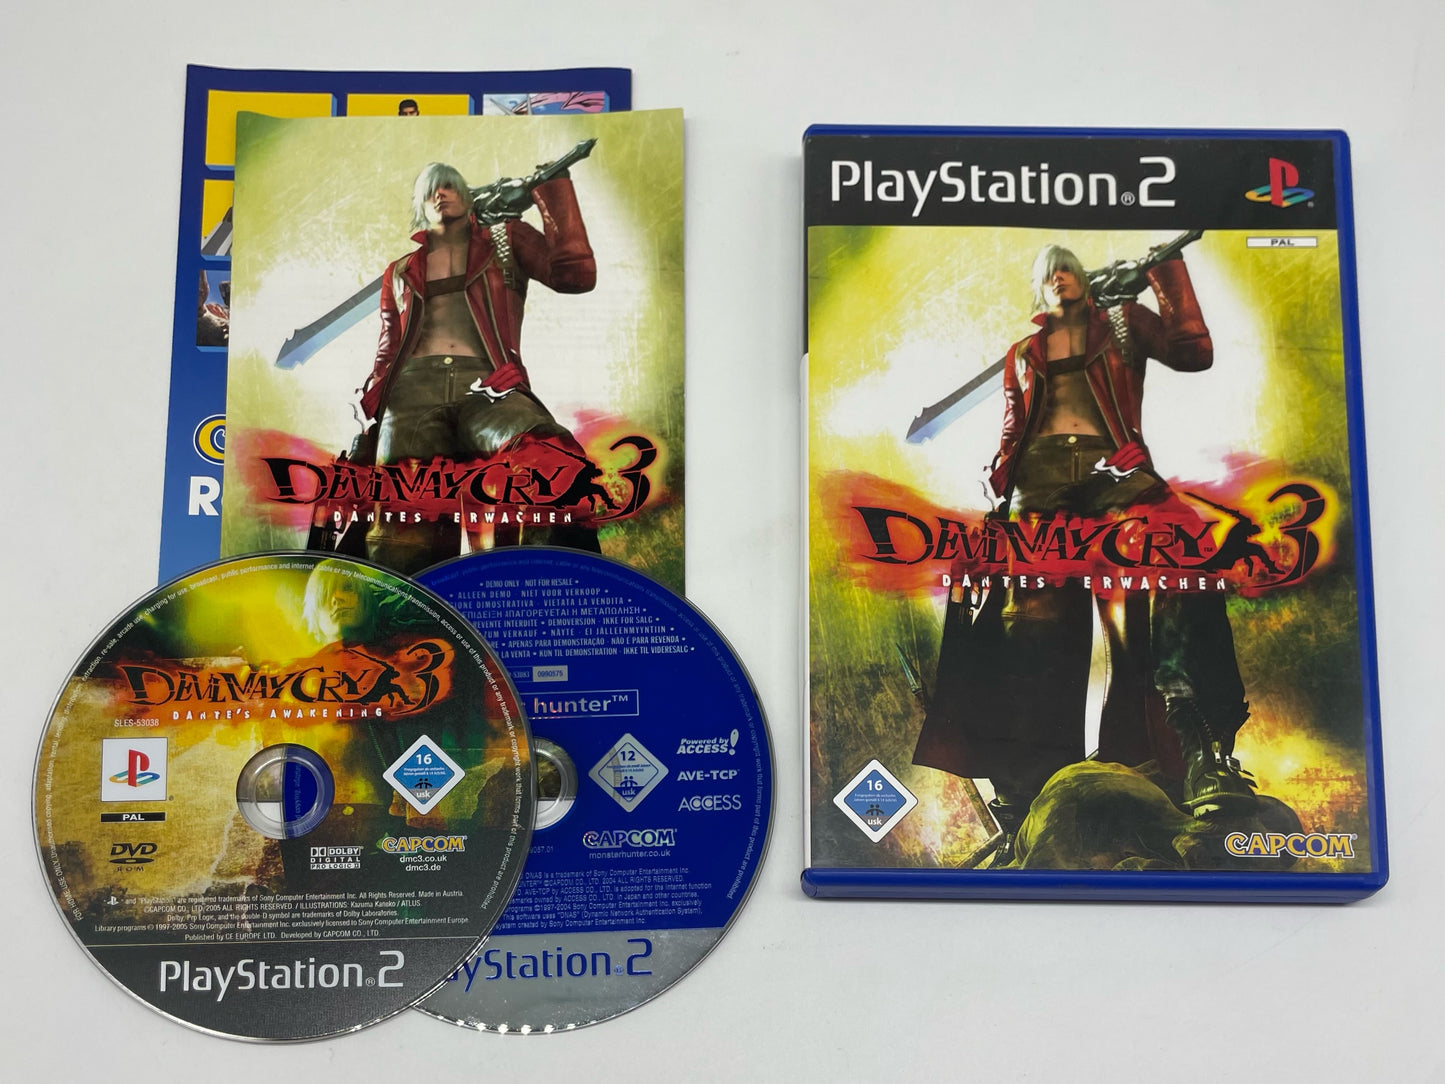 Devil May Cry 3: Dante's Awakening OVP